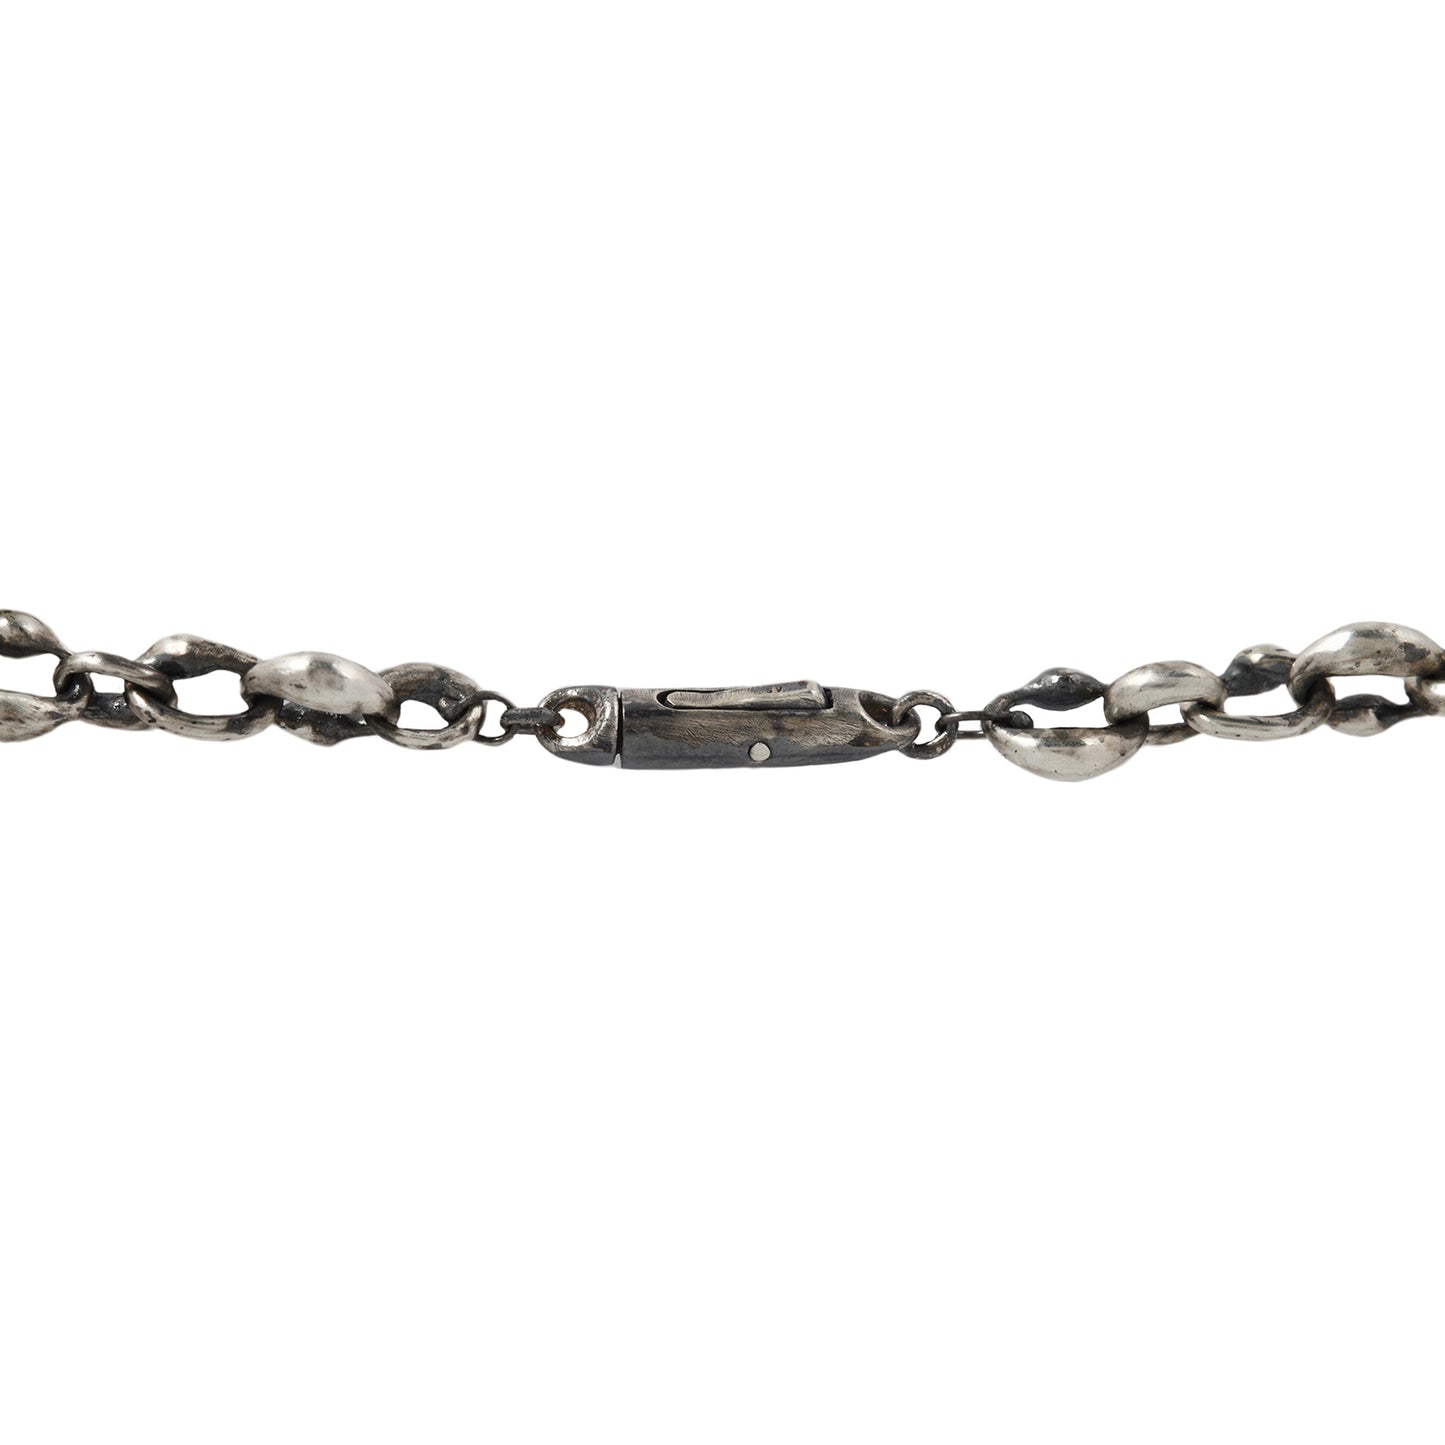 Oval Link Silver Chain Bracelet